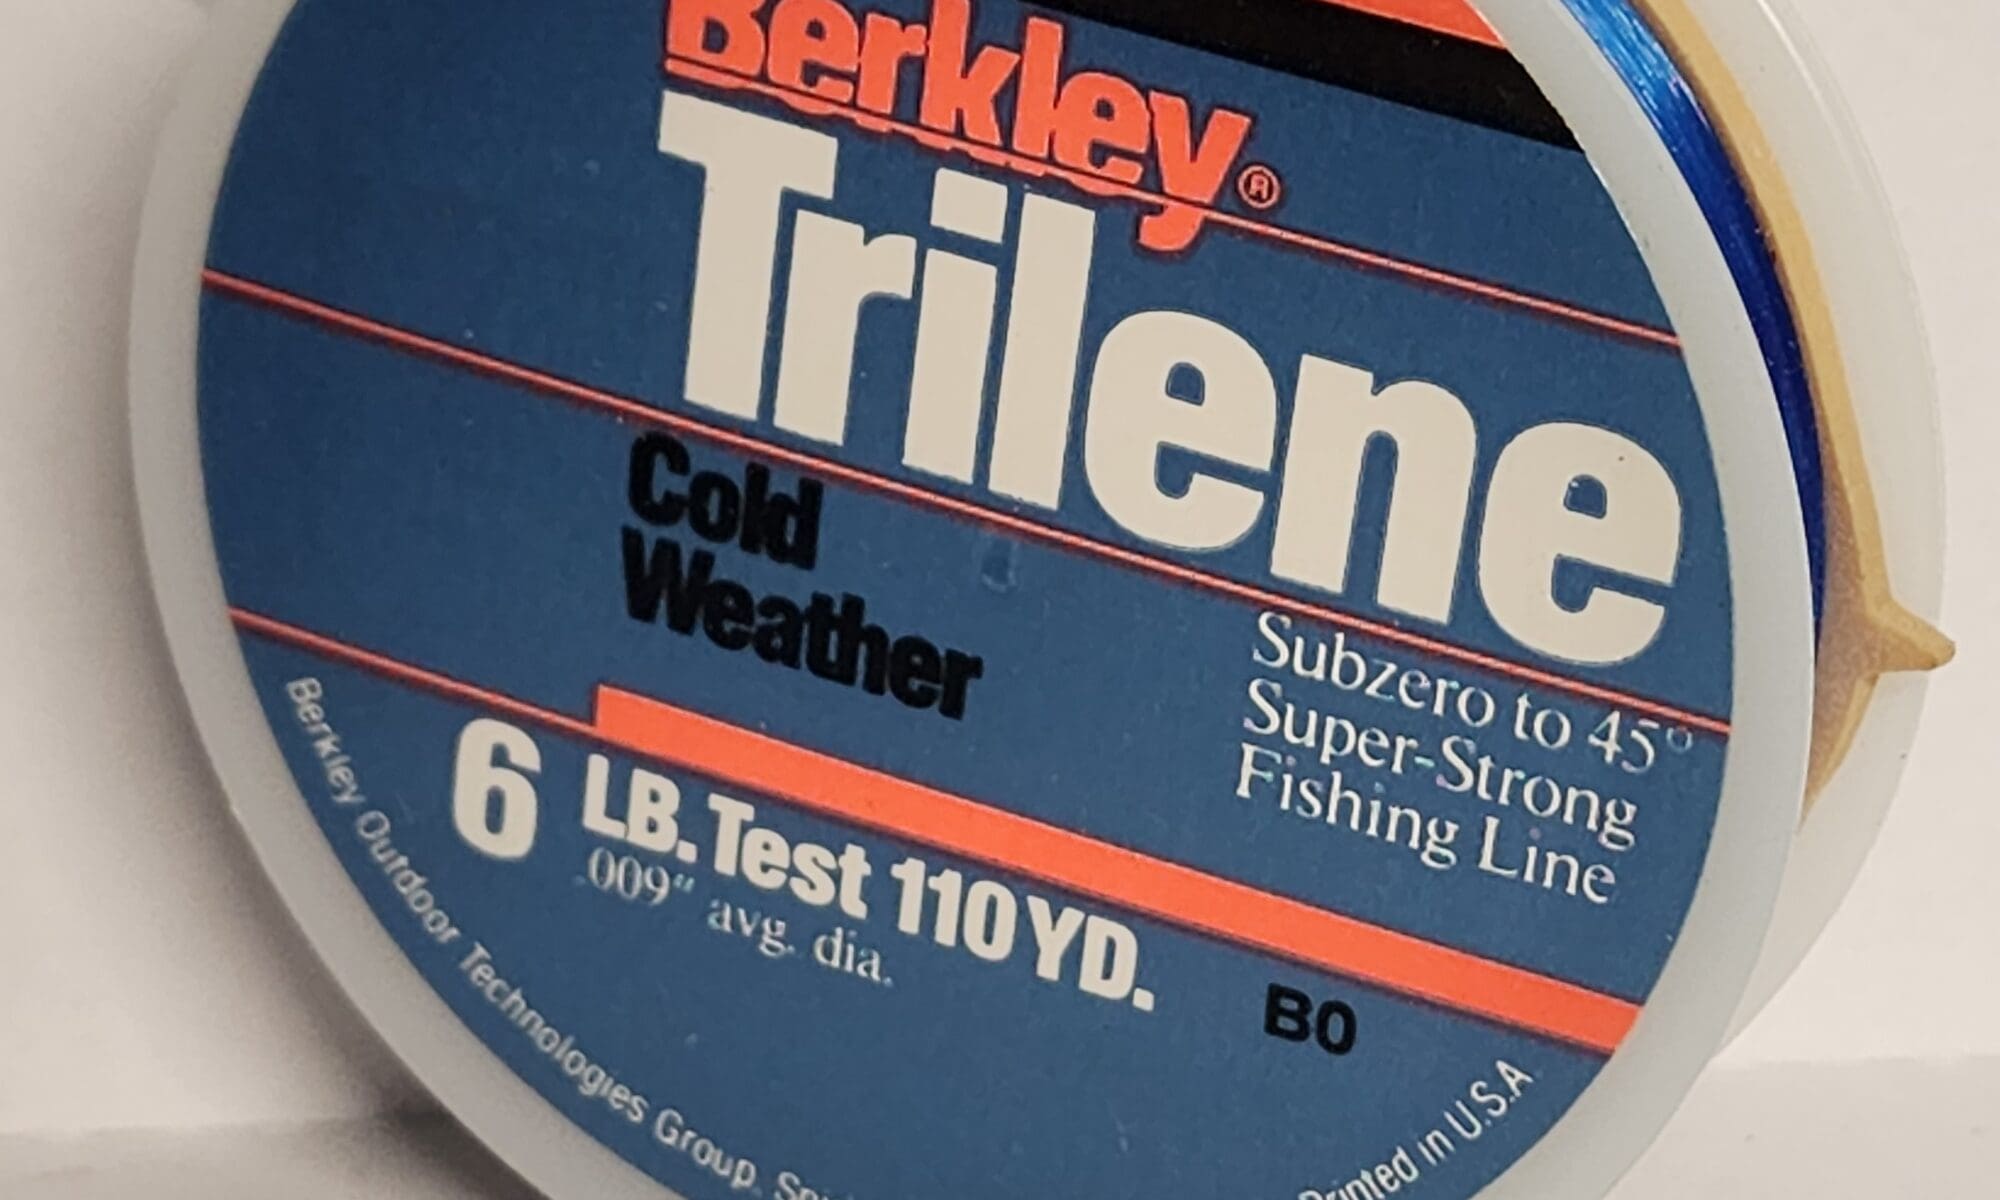 Berkley Trilene Cold Weather Ice Fishing Line 6 LB Test 110 Yards